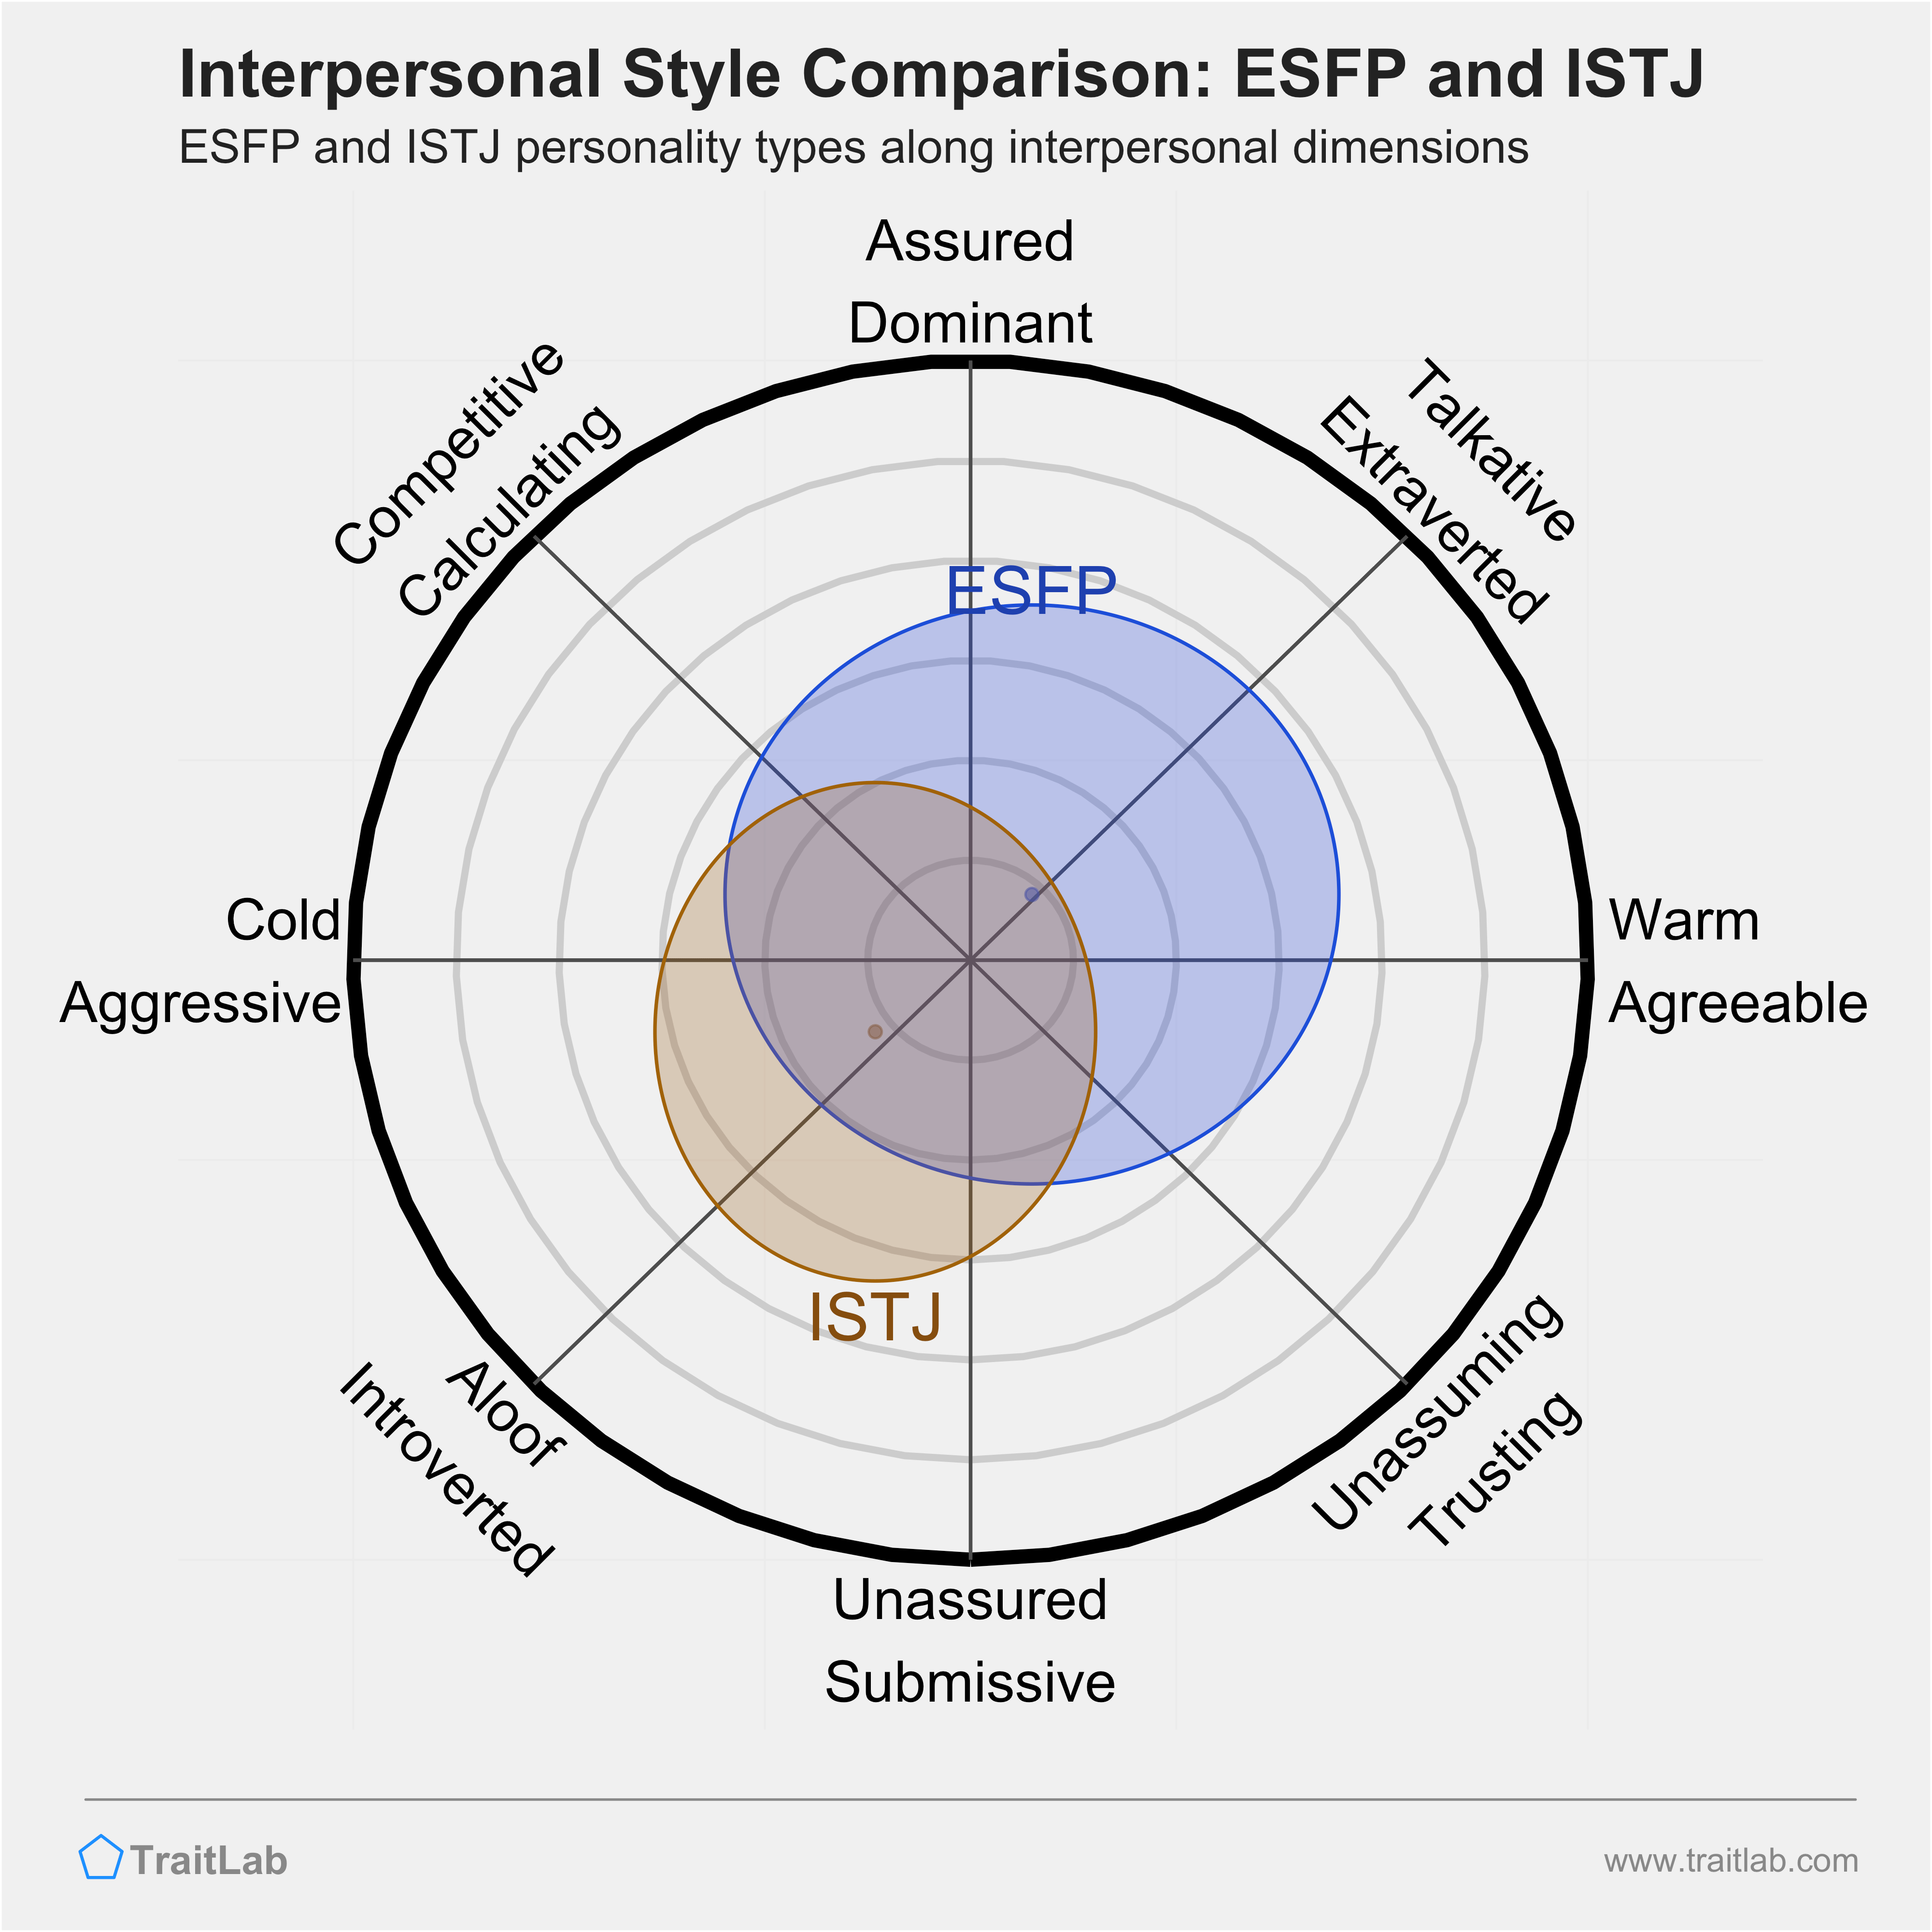 ESFP and ISTJ comparison across interpersonal dimensions